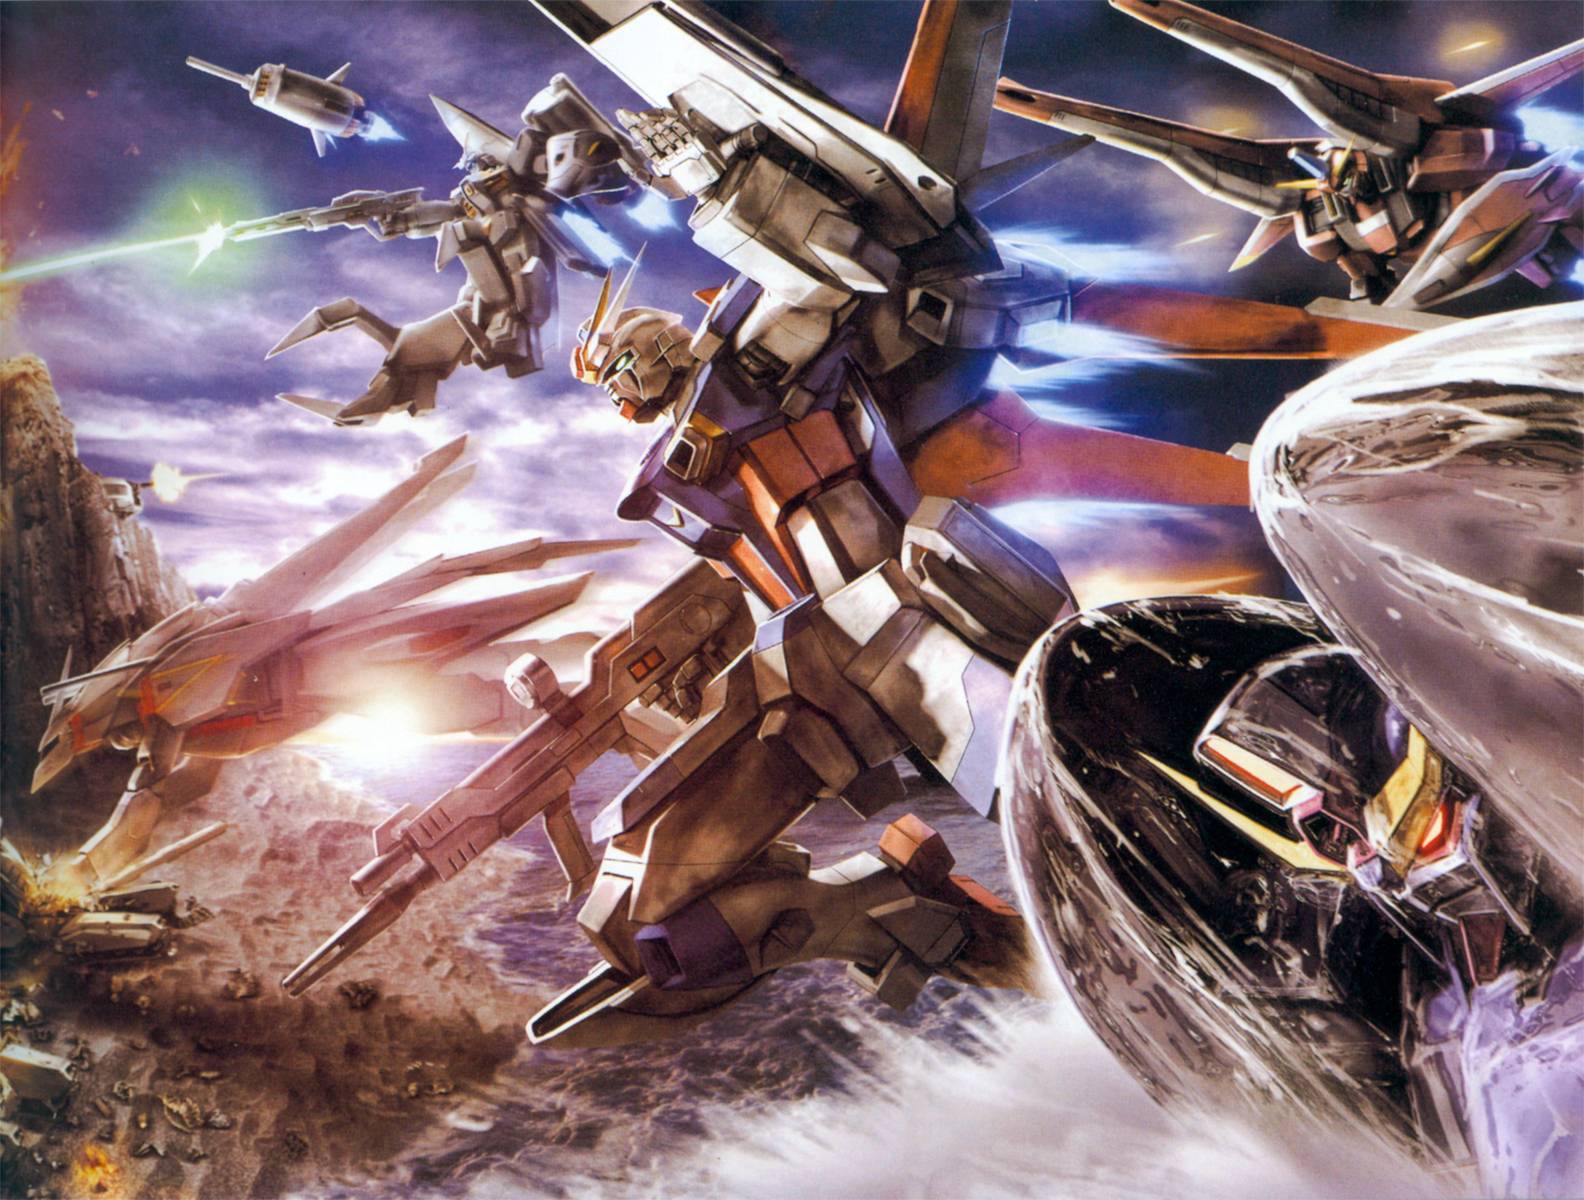 Tony Gundam Anime Wallpaper HD Widescreen 1584x1200PX Awesome